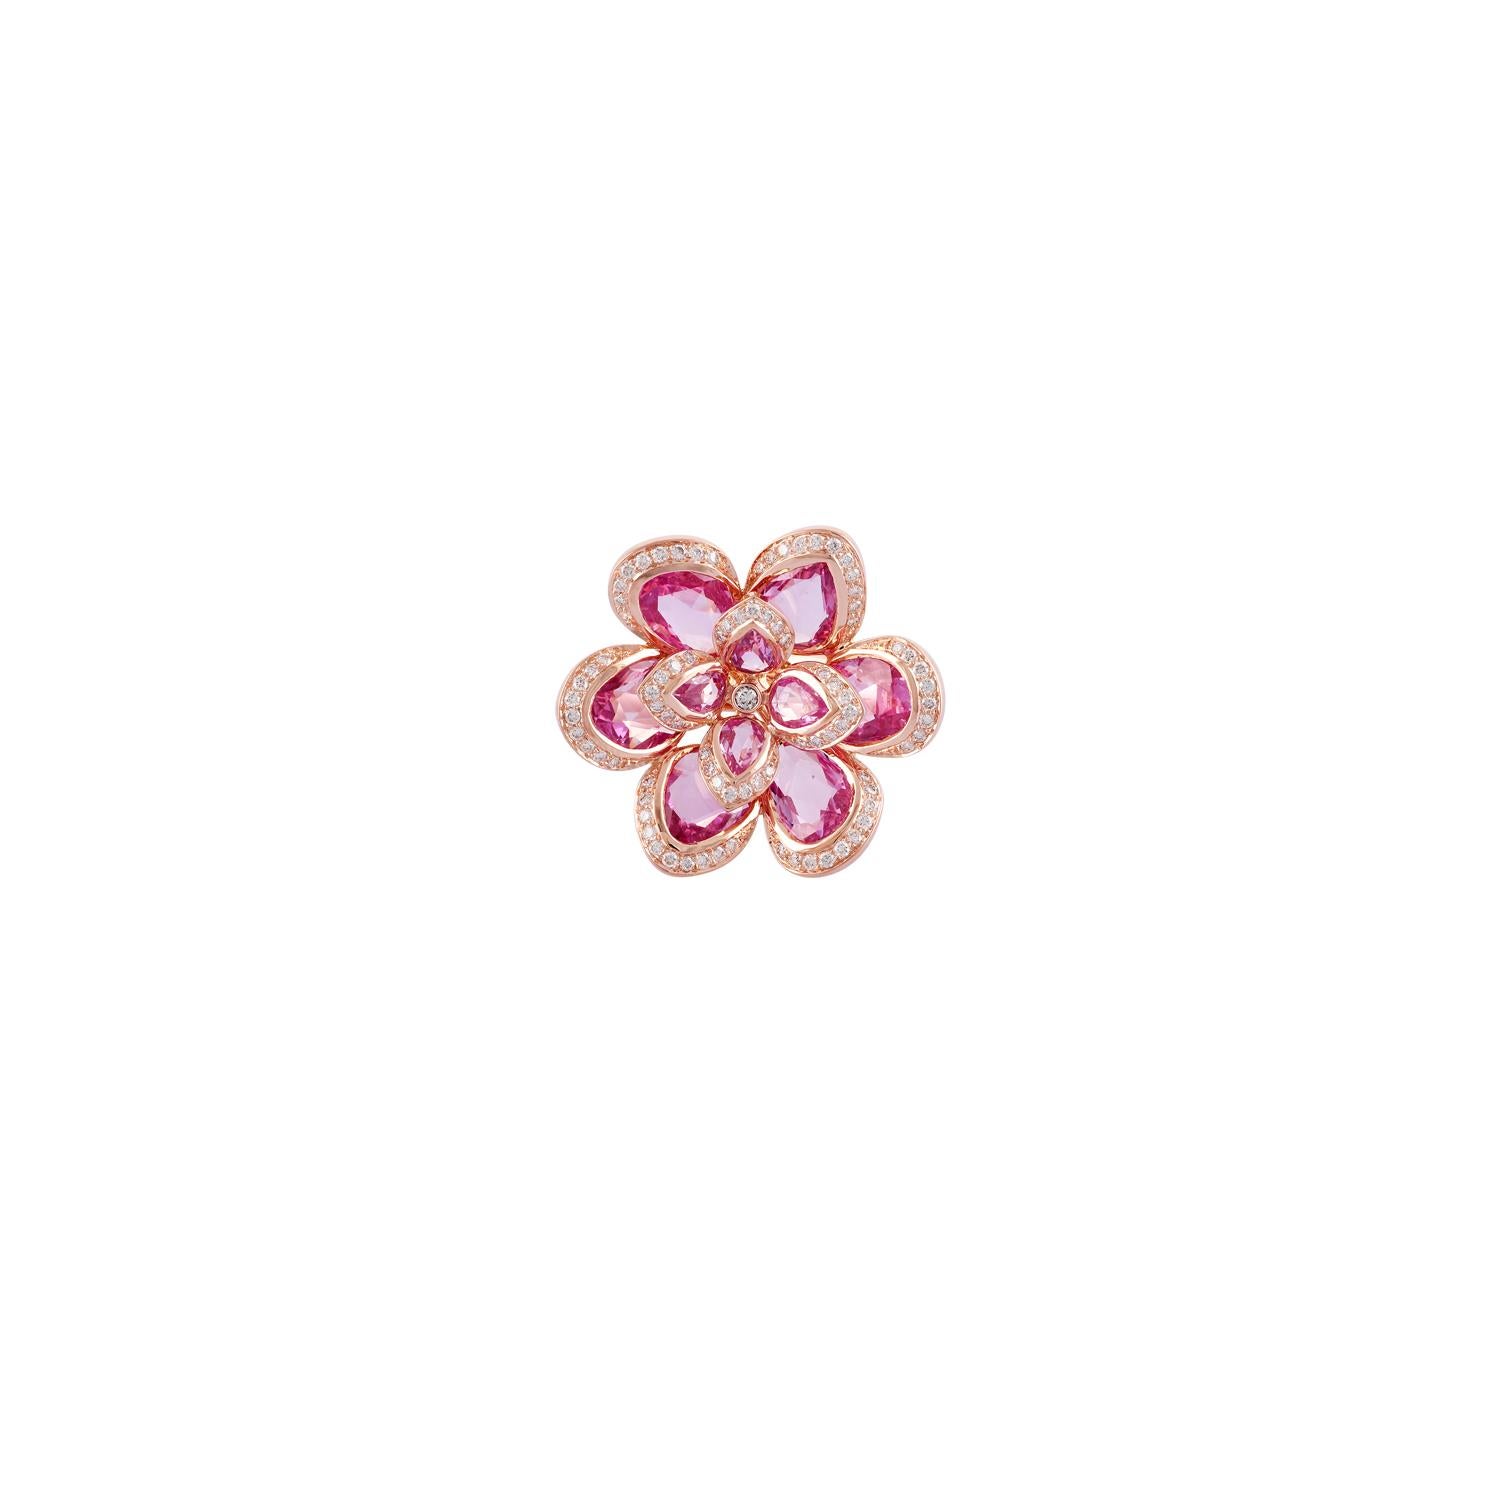 Rose-cut Uneven Pink Sapphires 5.49 carats
Full-cut Round Diamonds 0.65 carat
18kt Rose gold 8.96 grams
